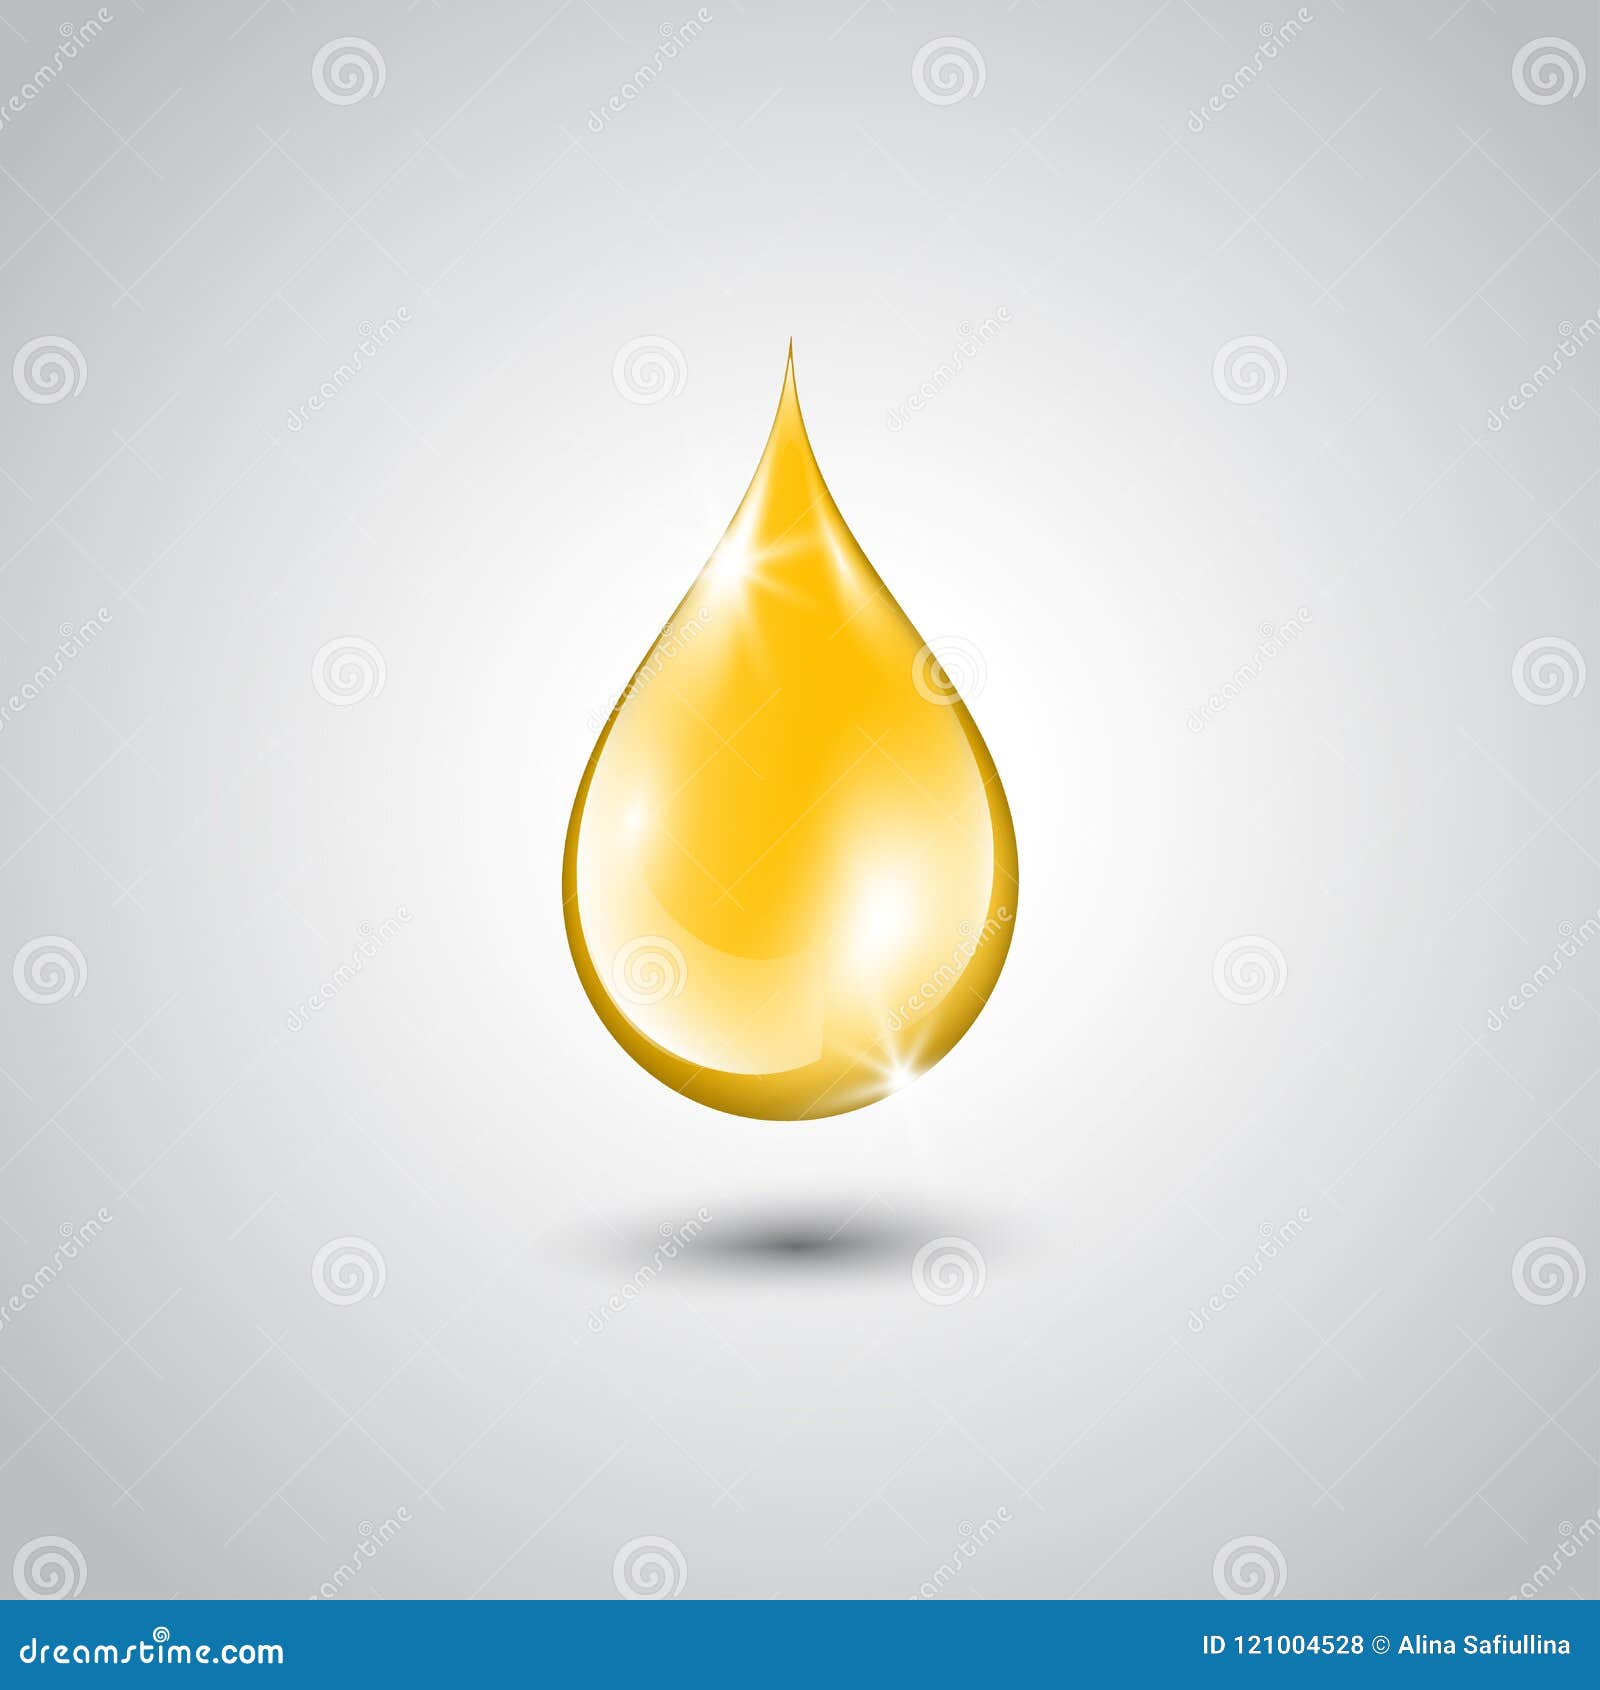 gold drop of oil essence.